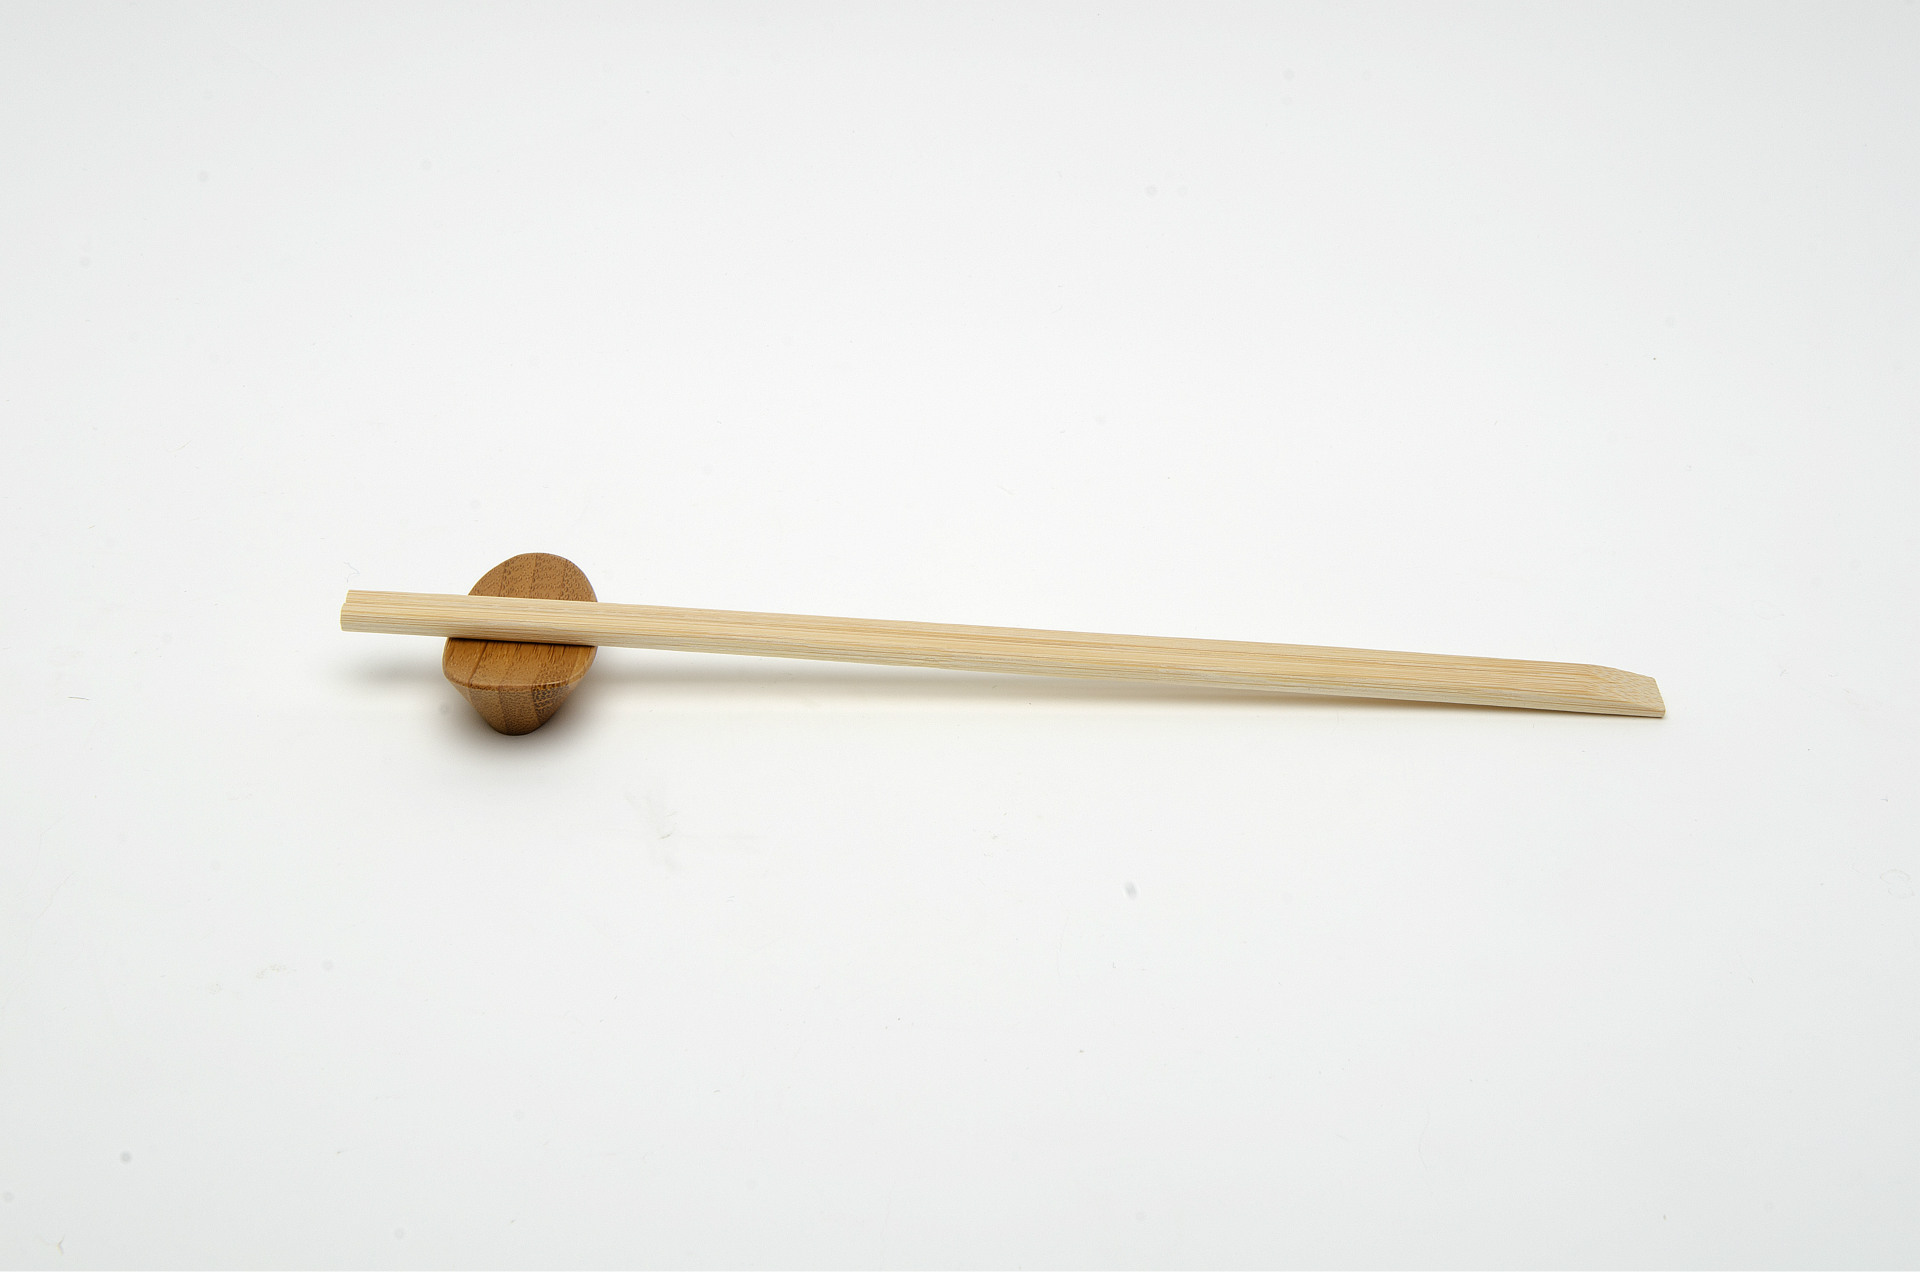 Koop Natual Sushi Bamboo Chopsticks. Natual Sushi Bamboo Chopsticks Prijzen. Natual Sushi Bamboo Chopsticks Brands. Natual Sushi Bamboo Chopsticks Fabrikant. Natual Sushi Bamboo Chopsticks Quotes. Natual Sushi Bamboo Chopsticks Company.